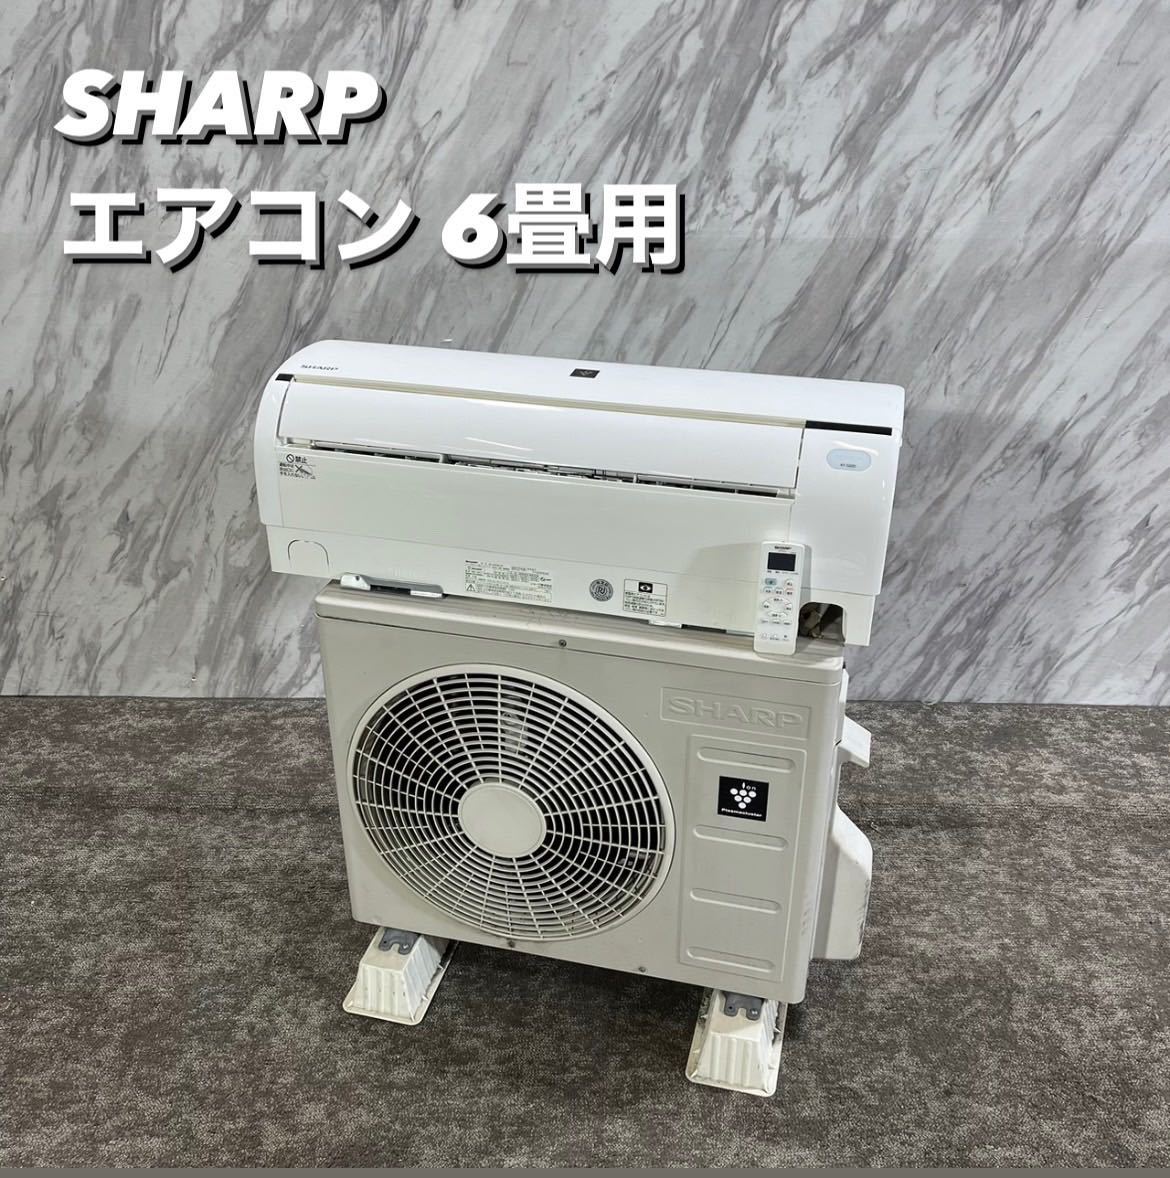 SHARP エアコン AY-G22D 6畳用 プラズマクラスター R017